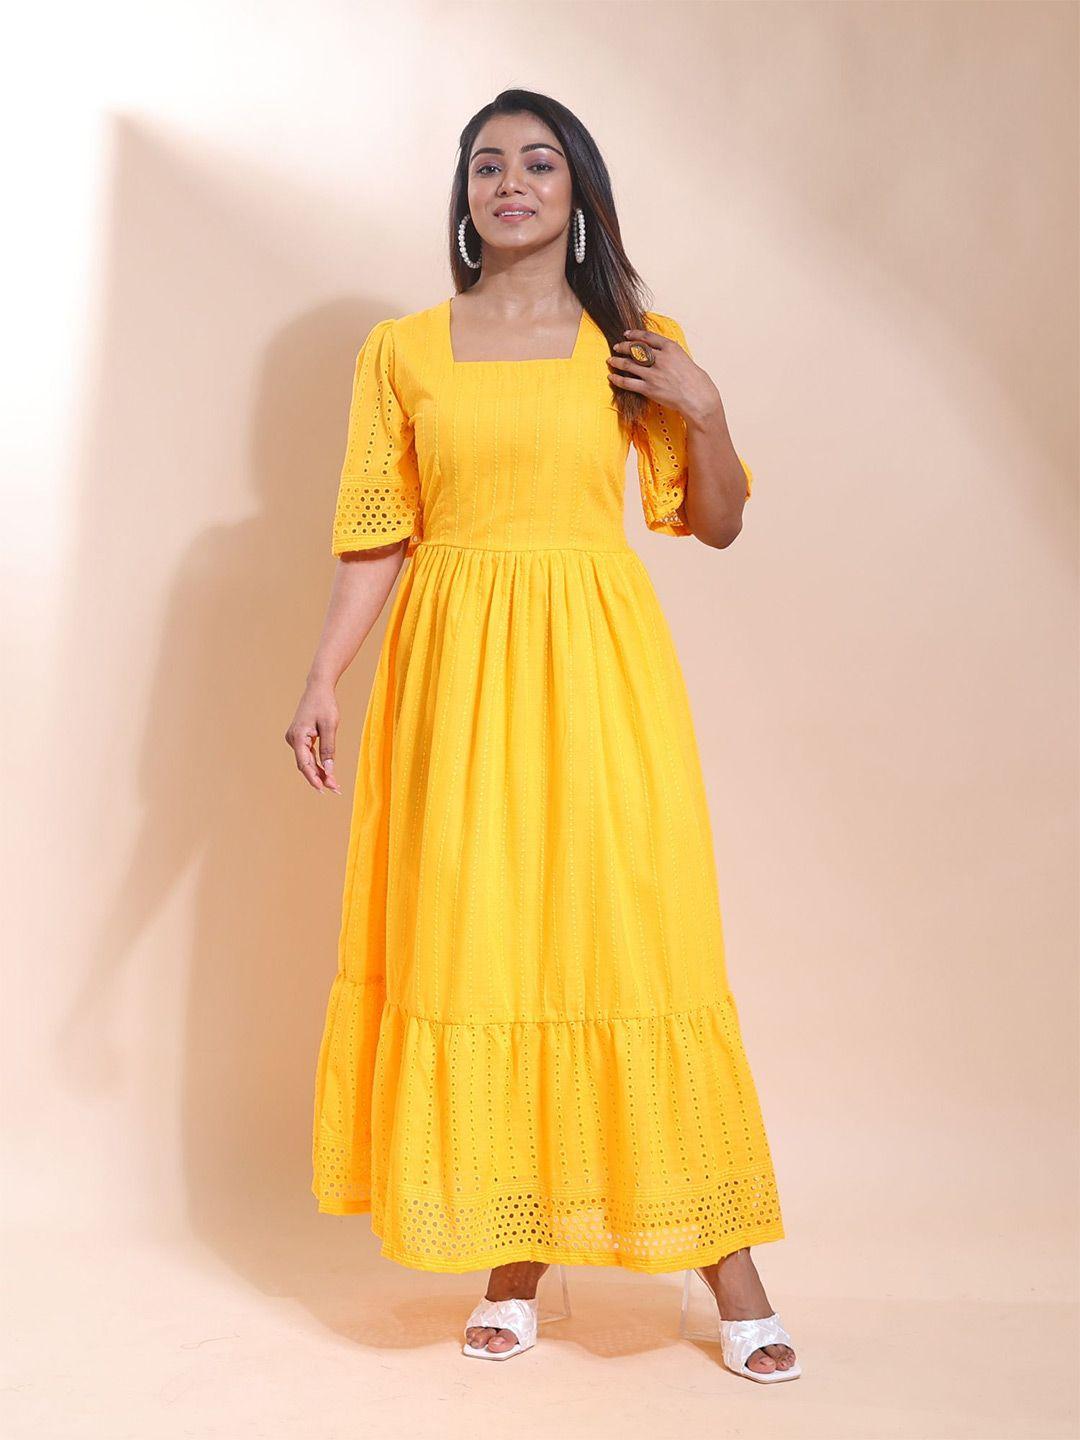 disli yellow maxi dress